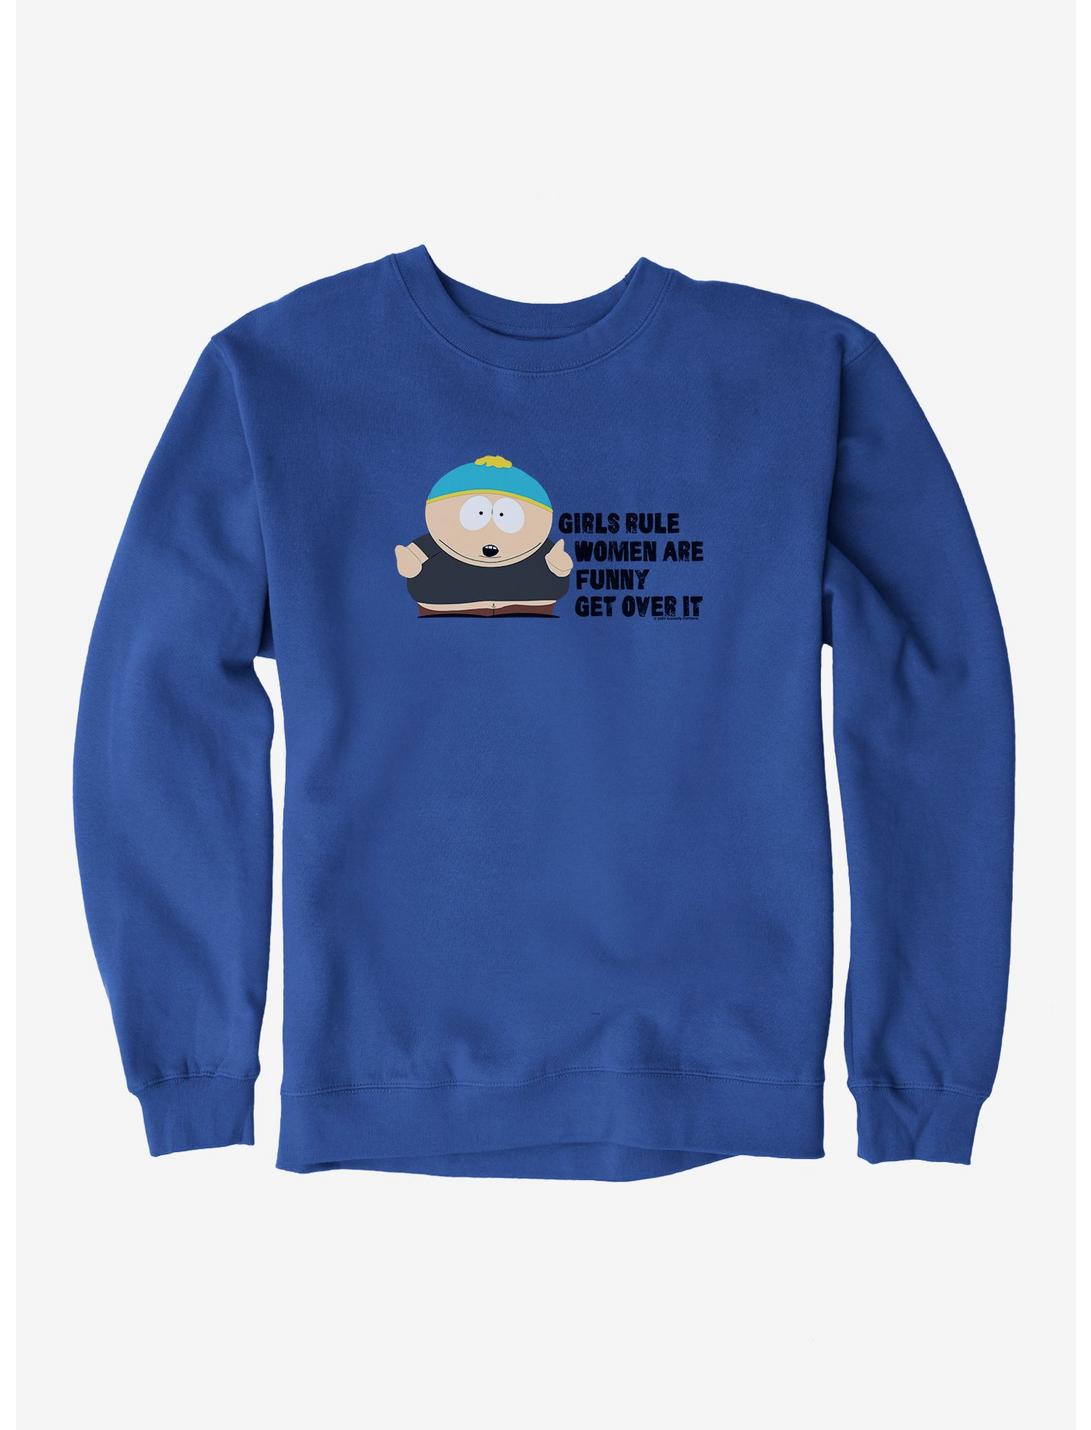 South Park Season Reference Girls Rule Sweatshirt, , hi-res